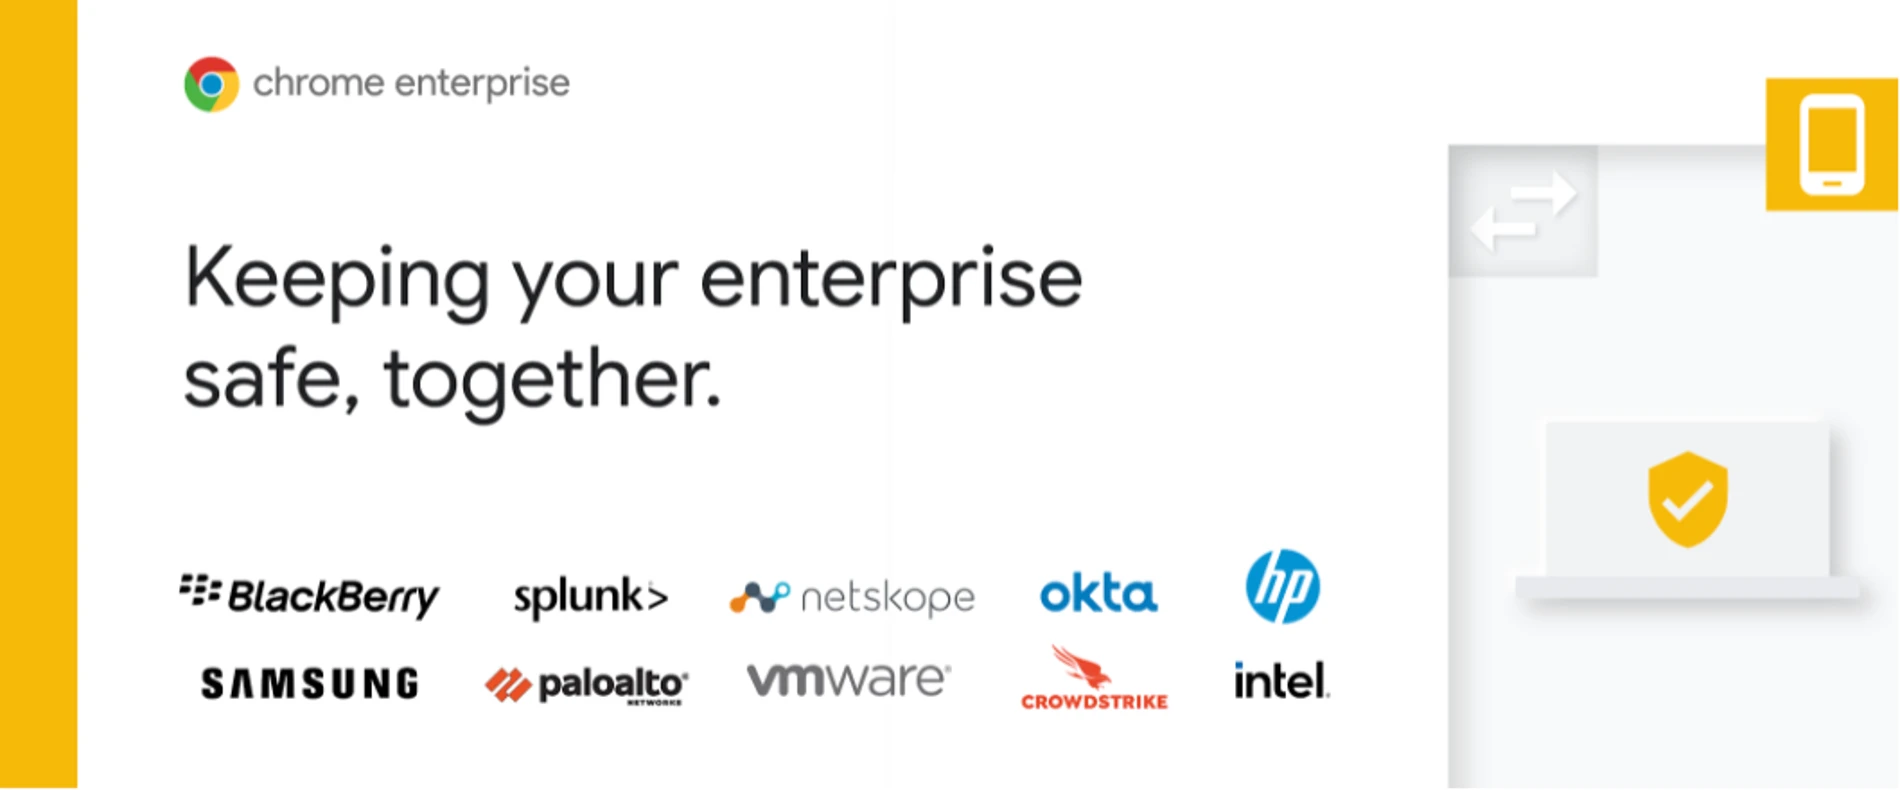 Chrome Enterprise Partners